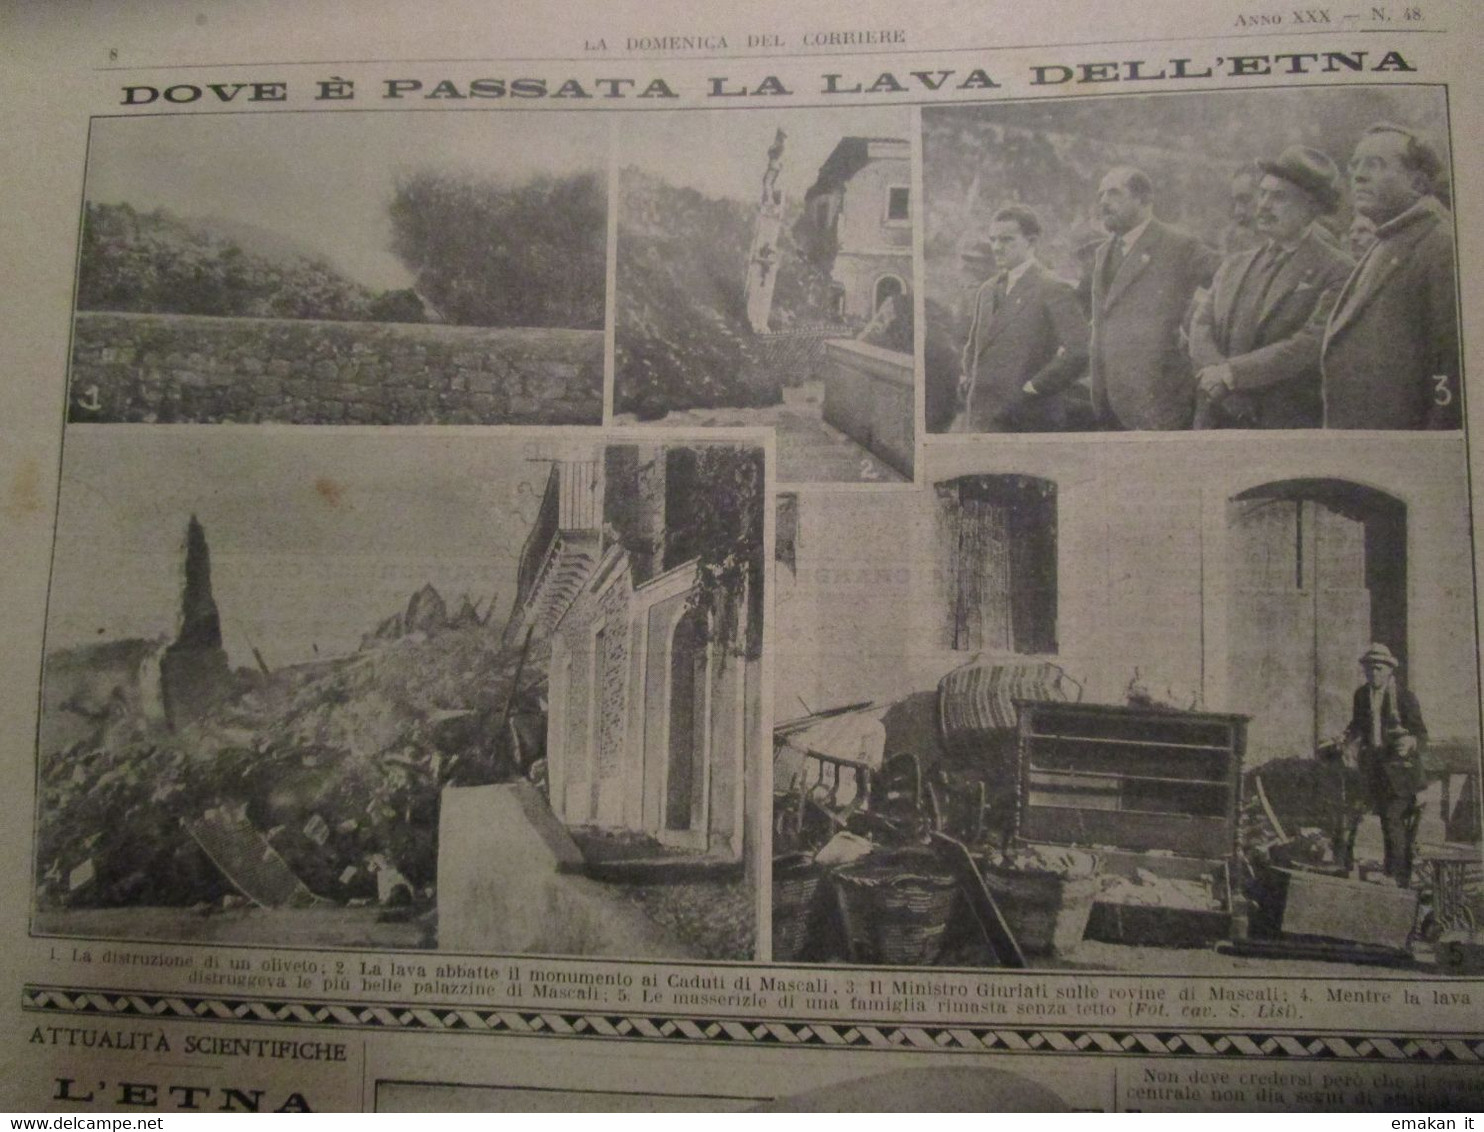 # DOMENICA DEL CORRIERE N 47 /1928 MASCALI ERUZIONE ETNA / ORIGINI DI MUSSOLINI / PISA / CASA PER MUSICISTI - Premières éditions